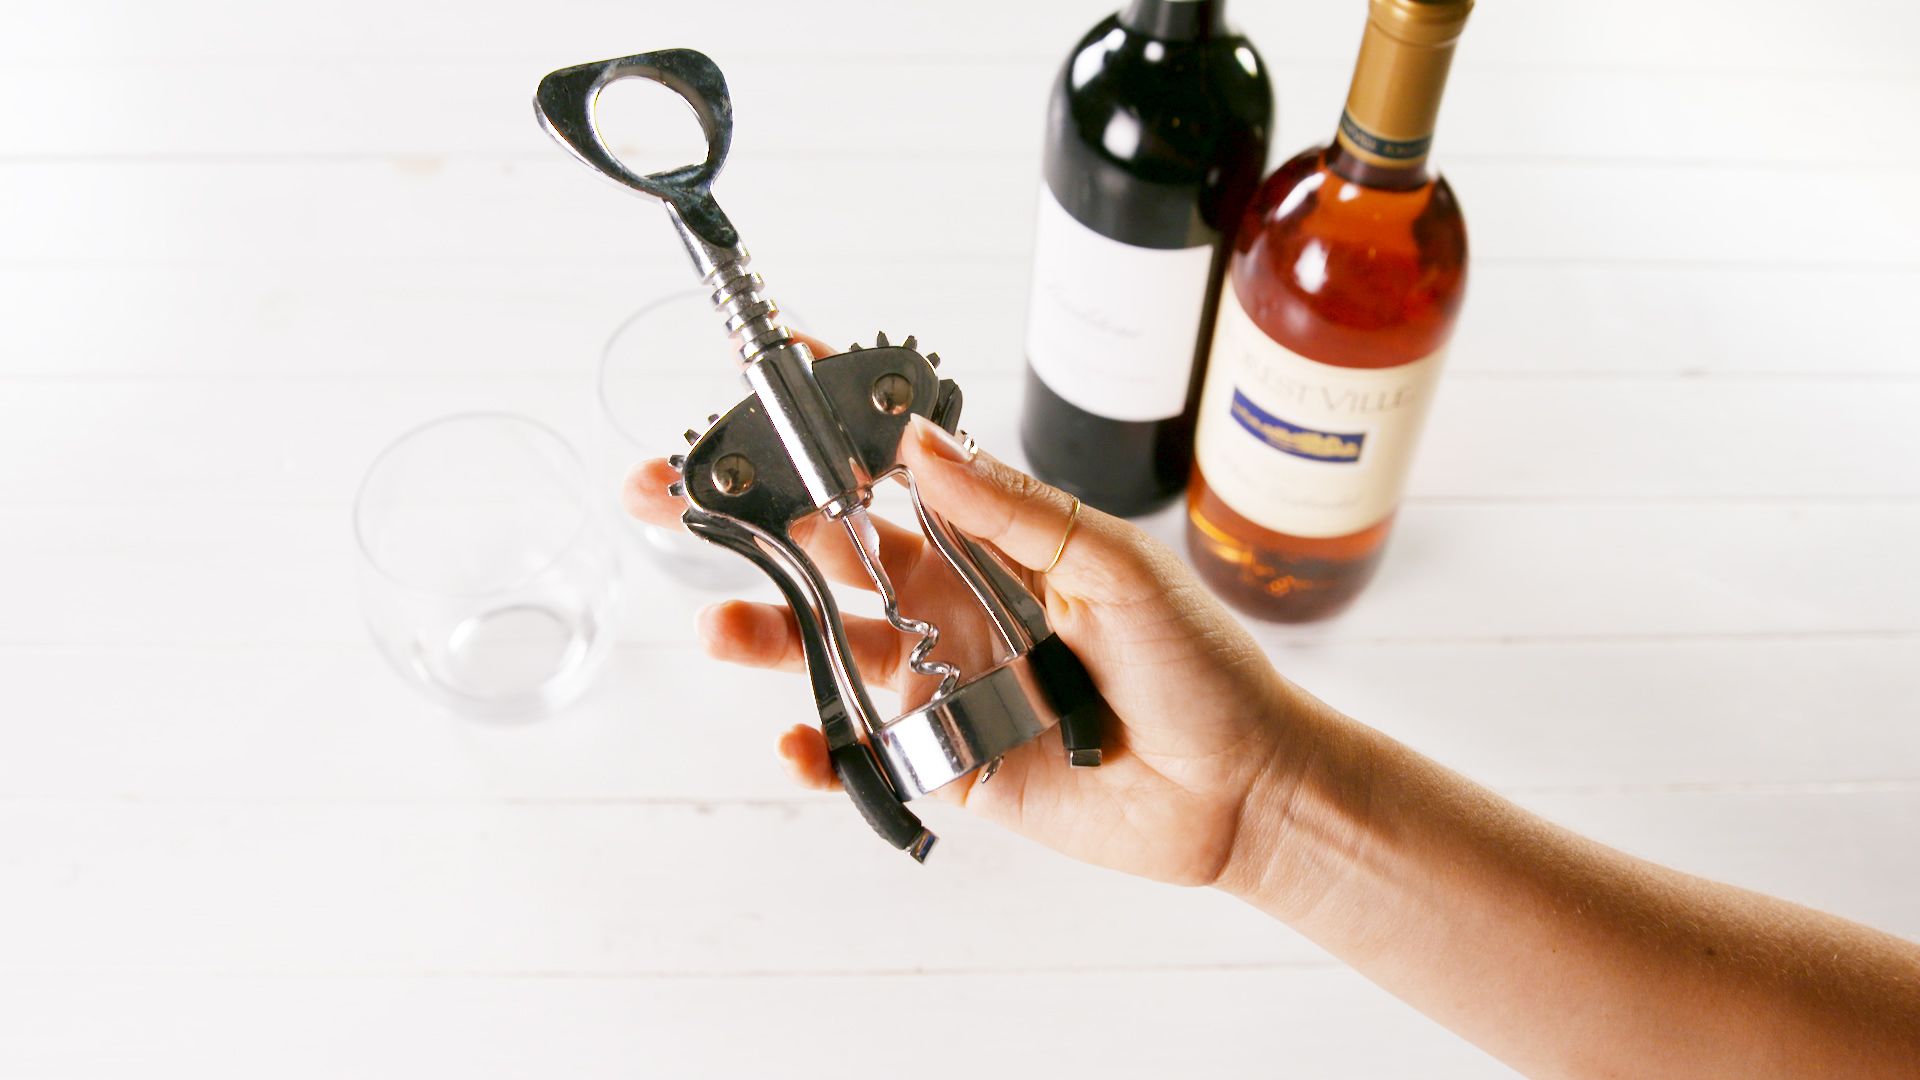 How To Use A Wine Bottle Opener Shop Outlets, Save 43% | jlcatj.gob.mx